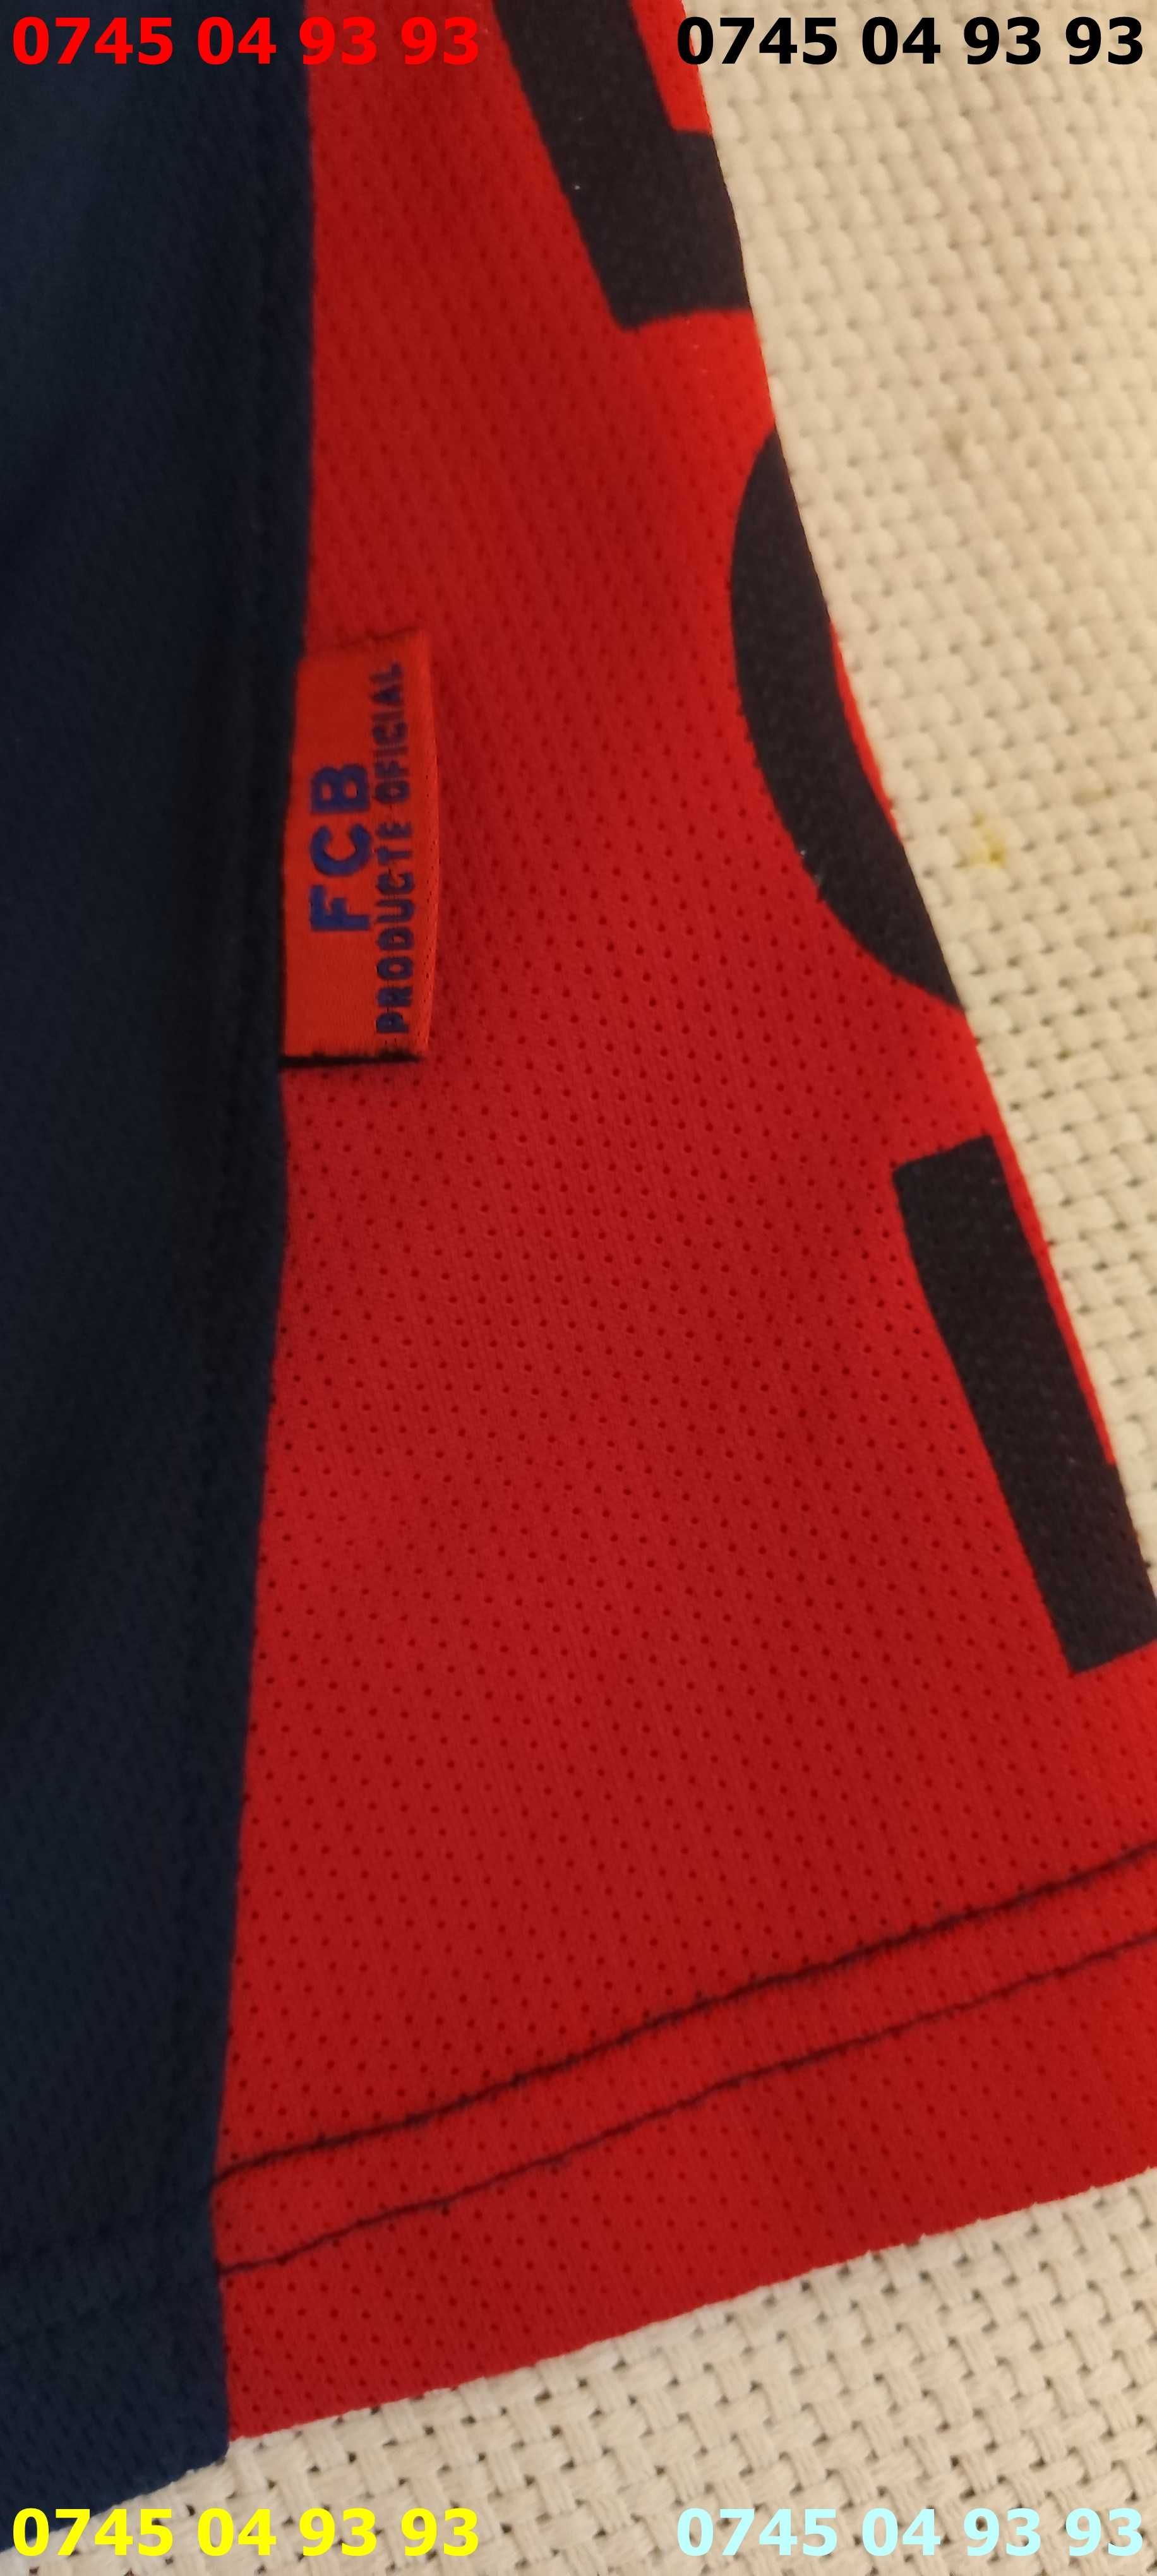 tricou original FCB Barcelona marimea XL arata ca nou